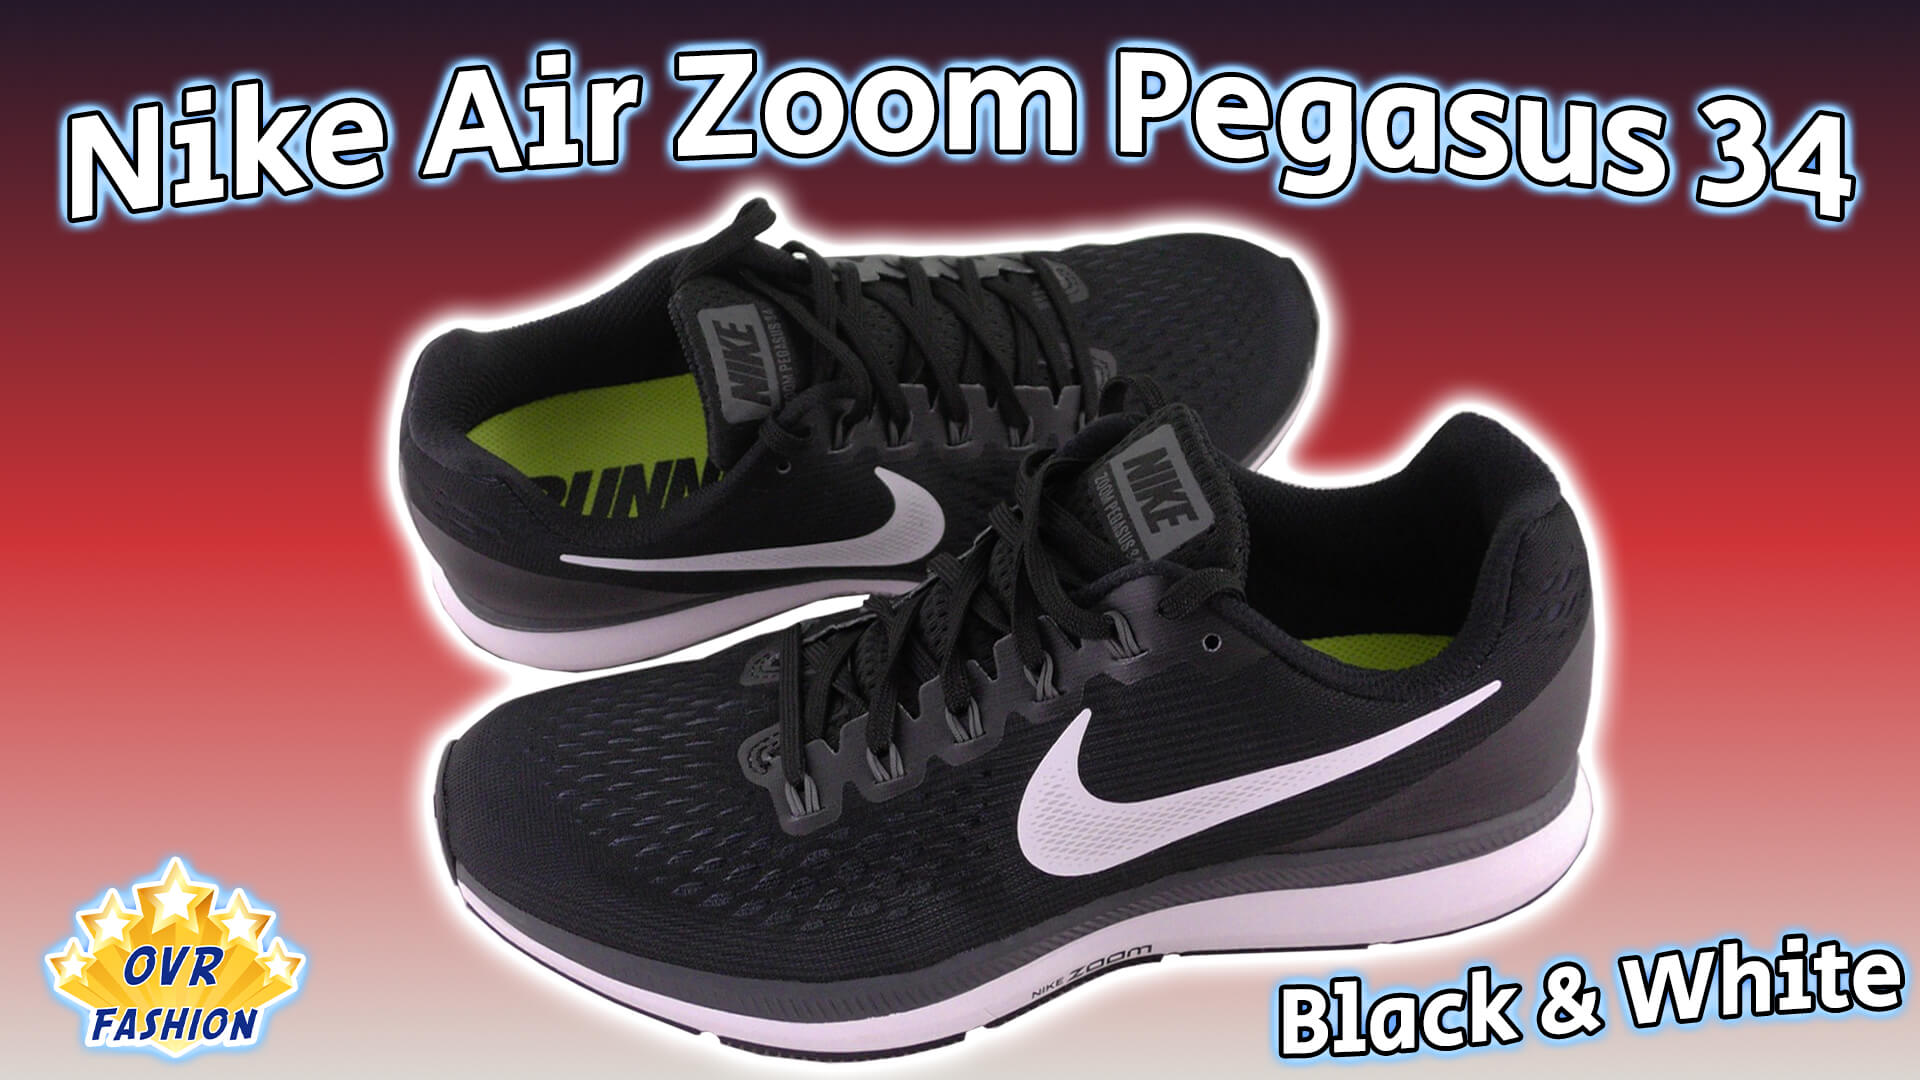 Punctuation Pogo stick jump Cook Nike Air Zoom Pegasus 34 Black & White (Review)